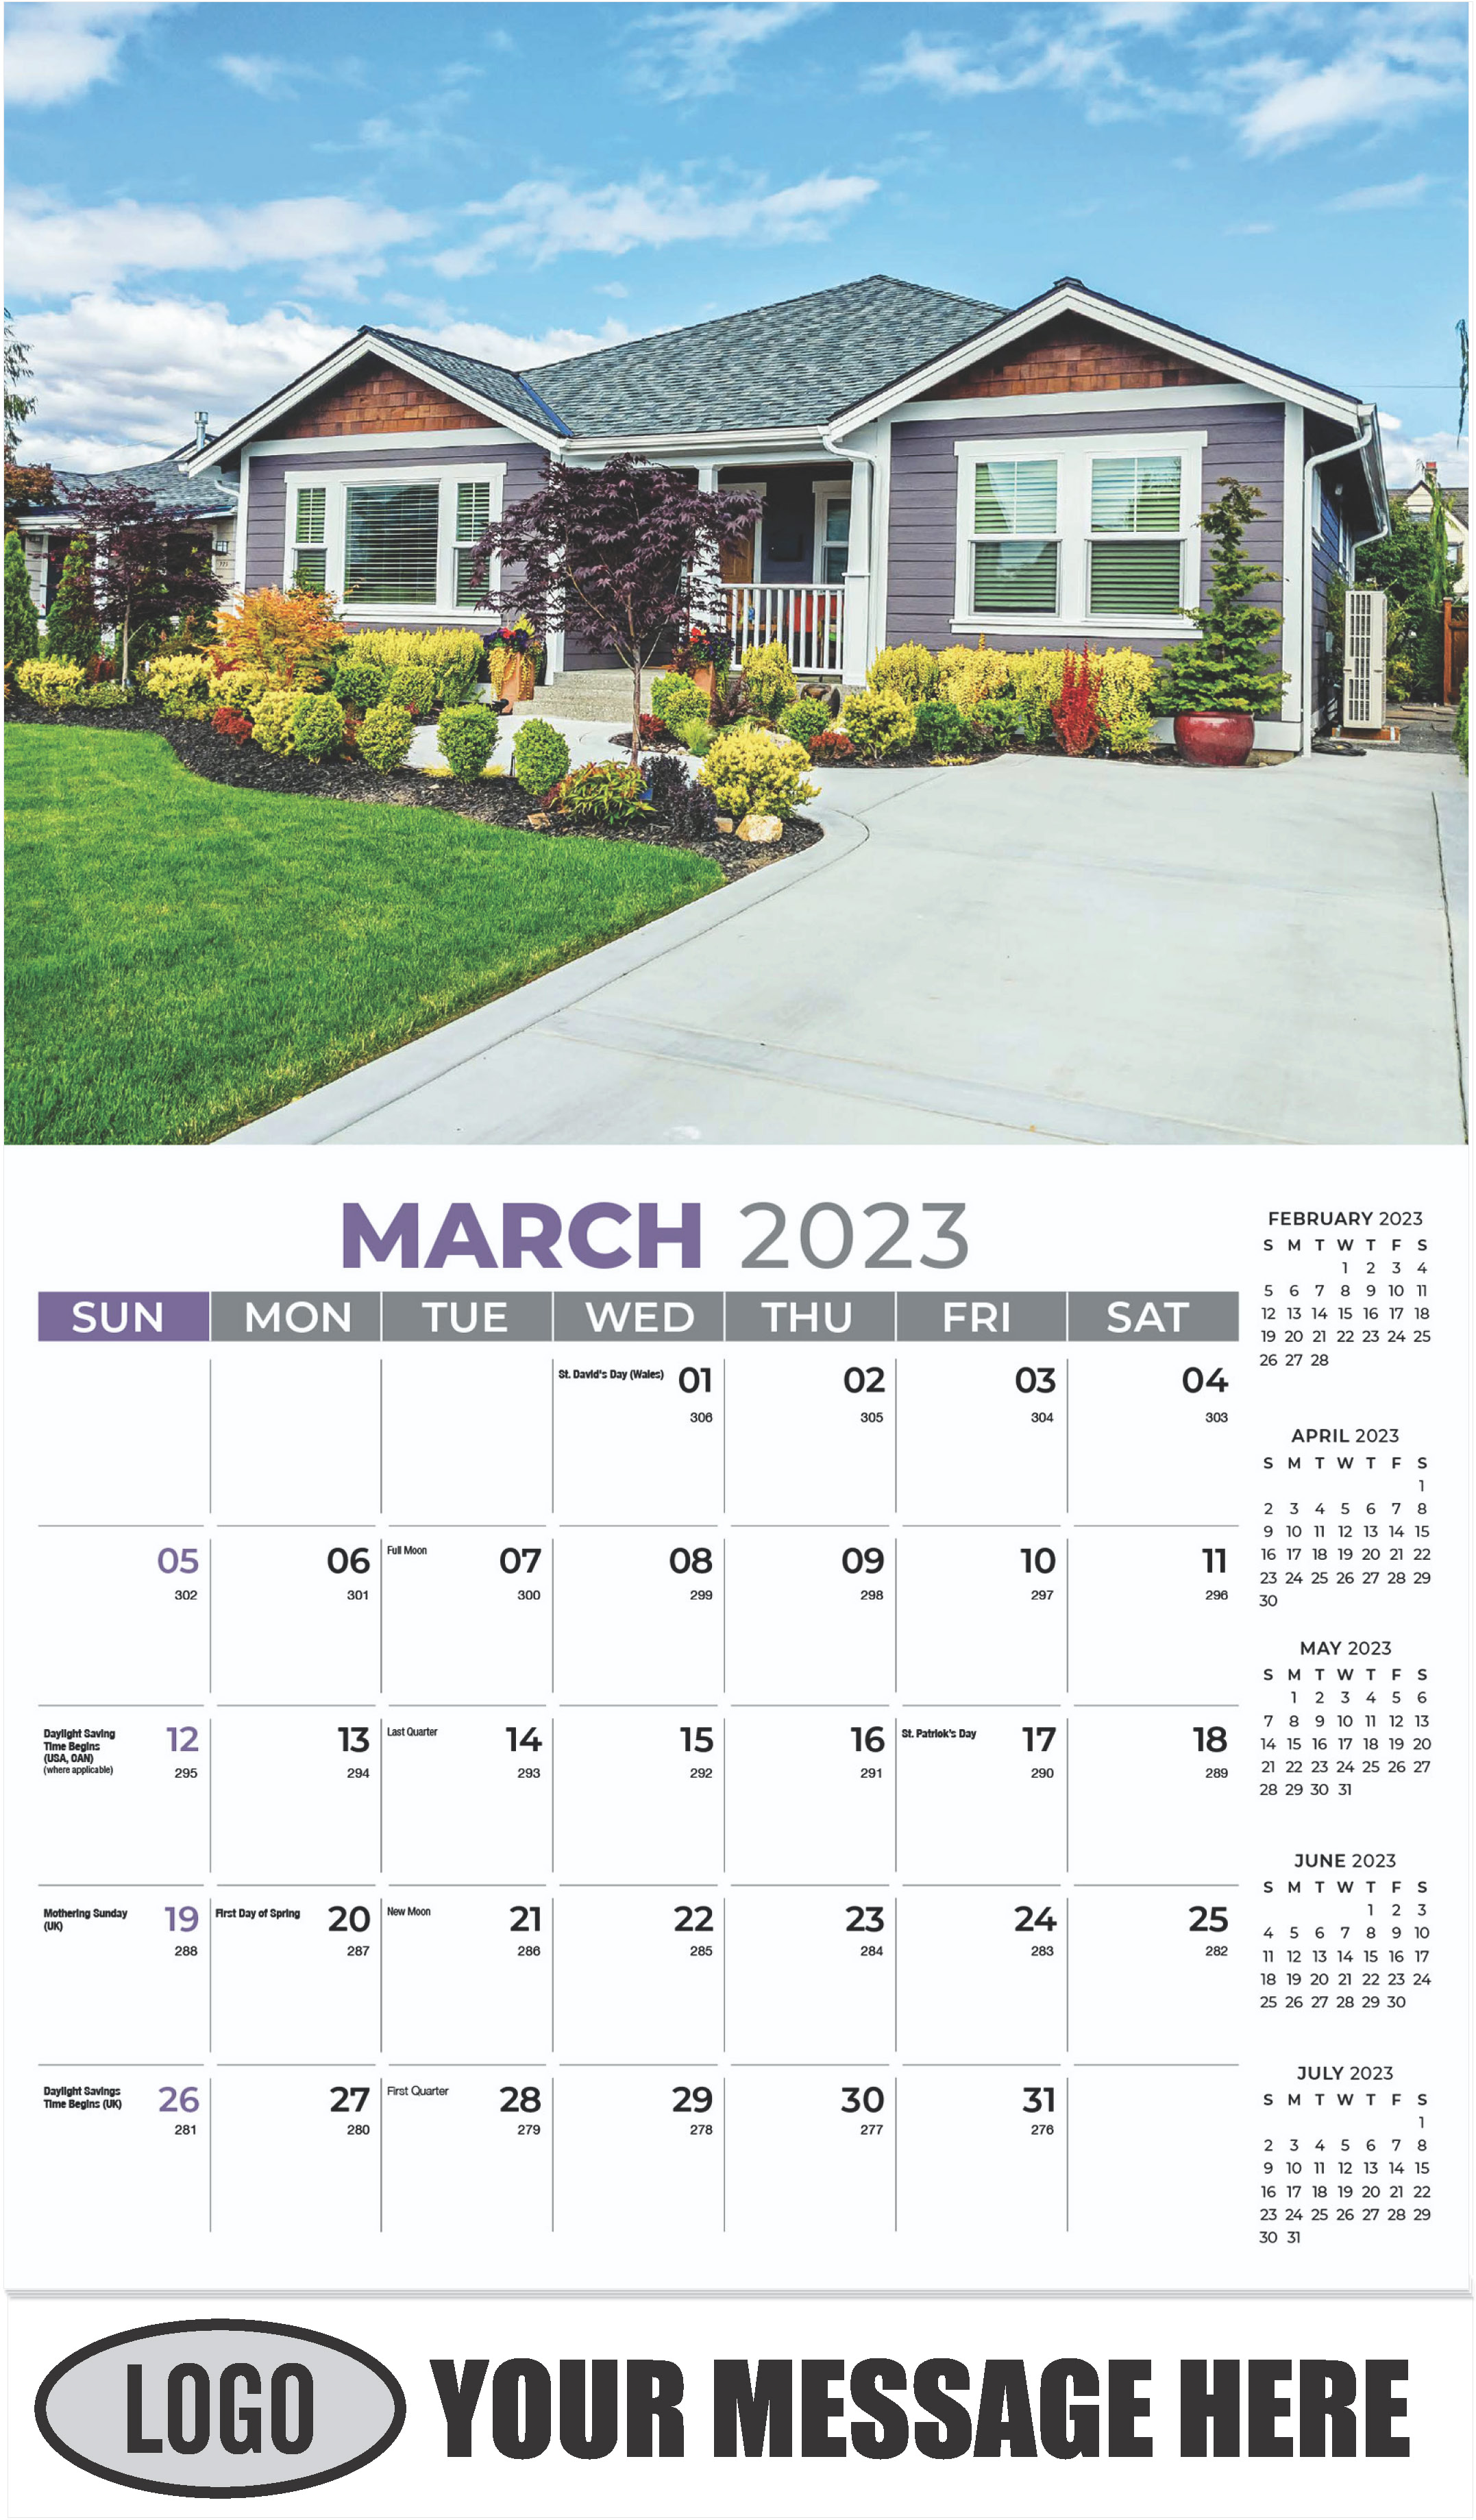 Luxury Homes Calendar - March - Homes 2023 Promotional Calendar